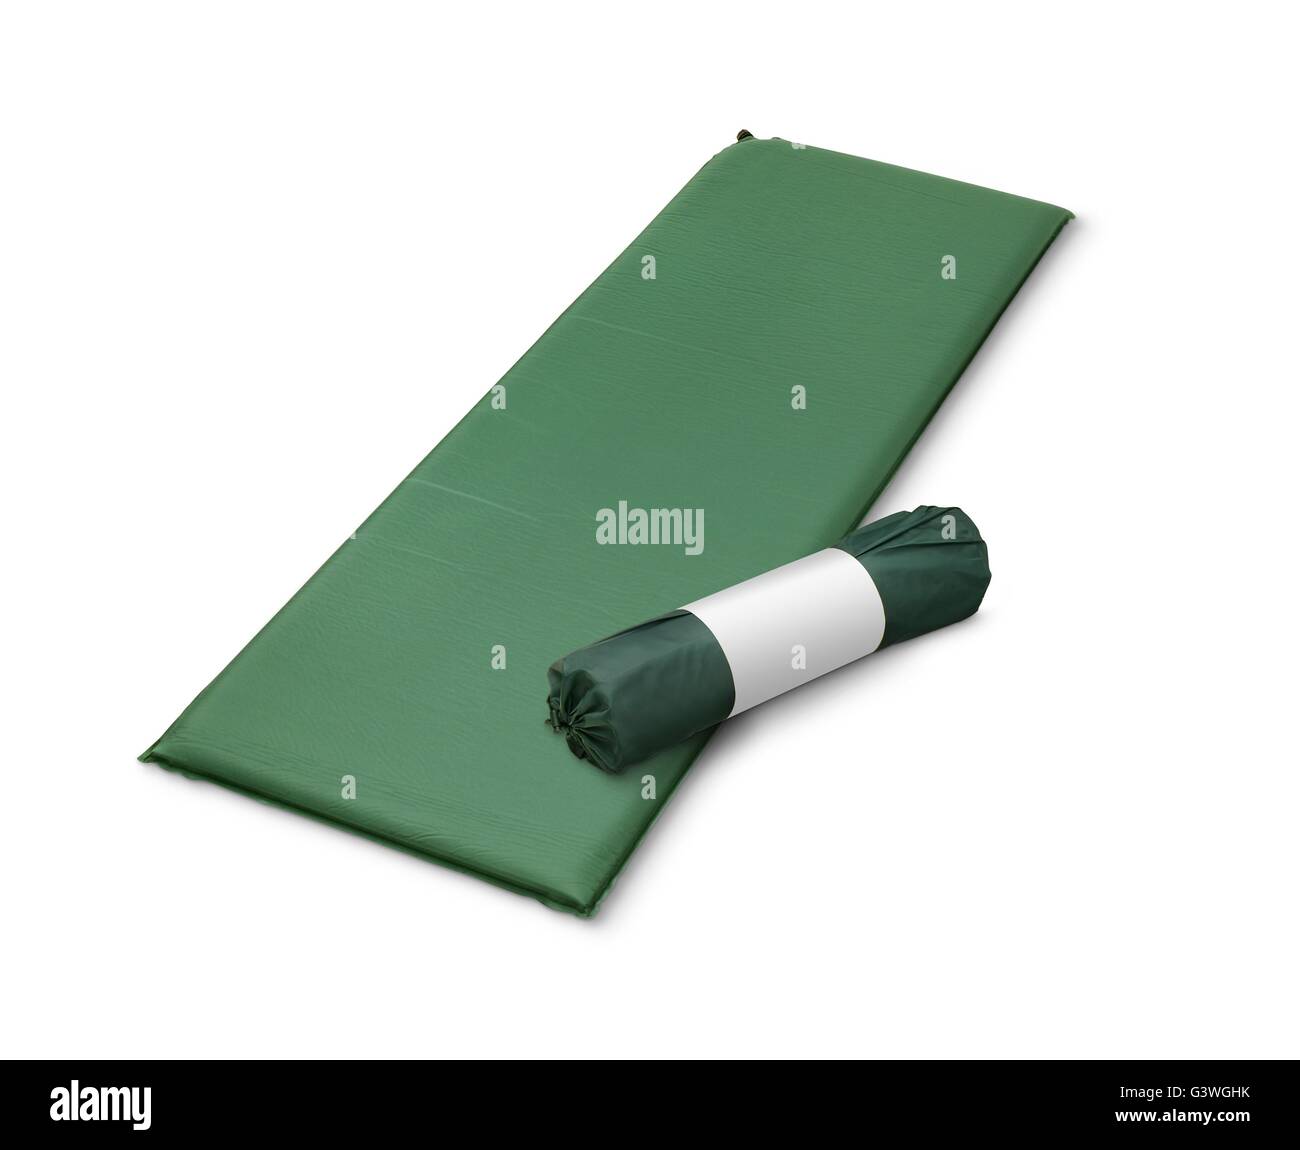 Terugspoelen Vermeend ambitie light self-inflating travel sleep matras isolated on white Stock Photo -  Alamy